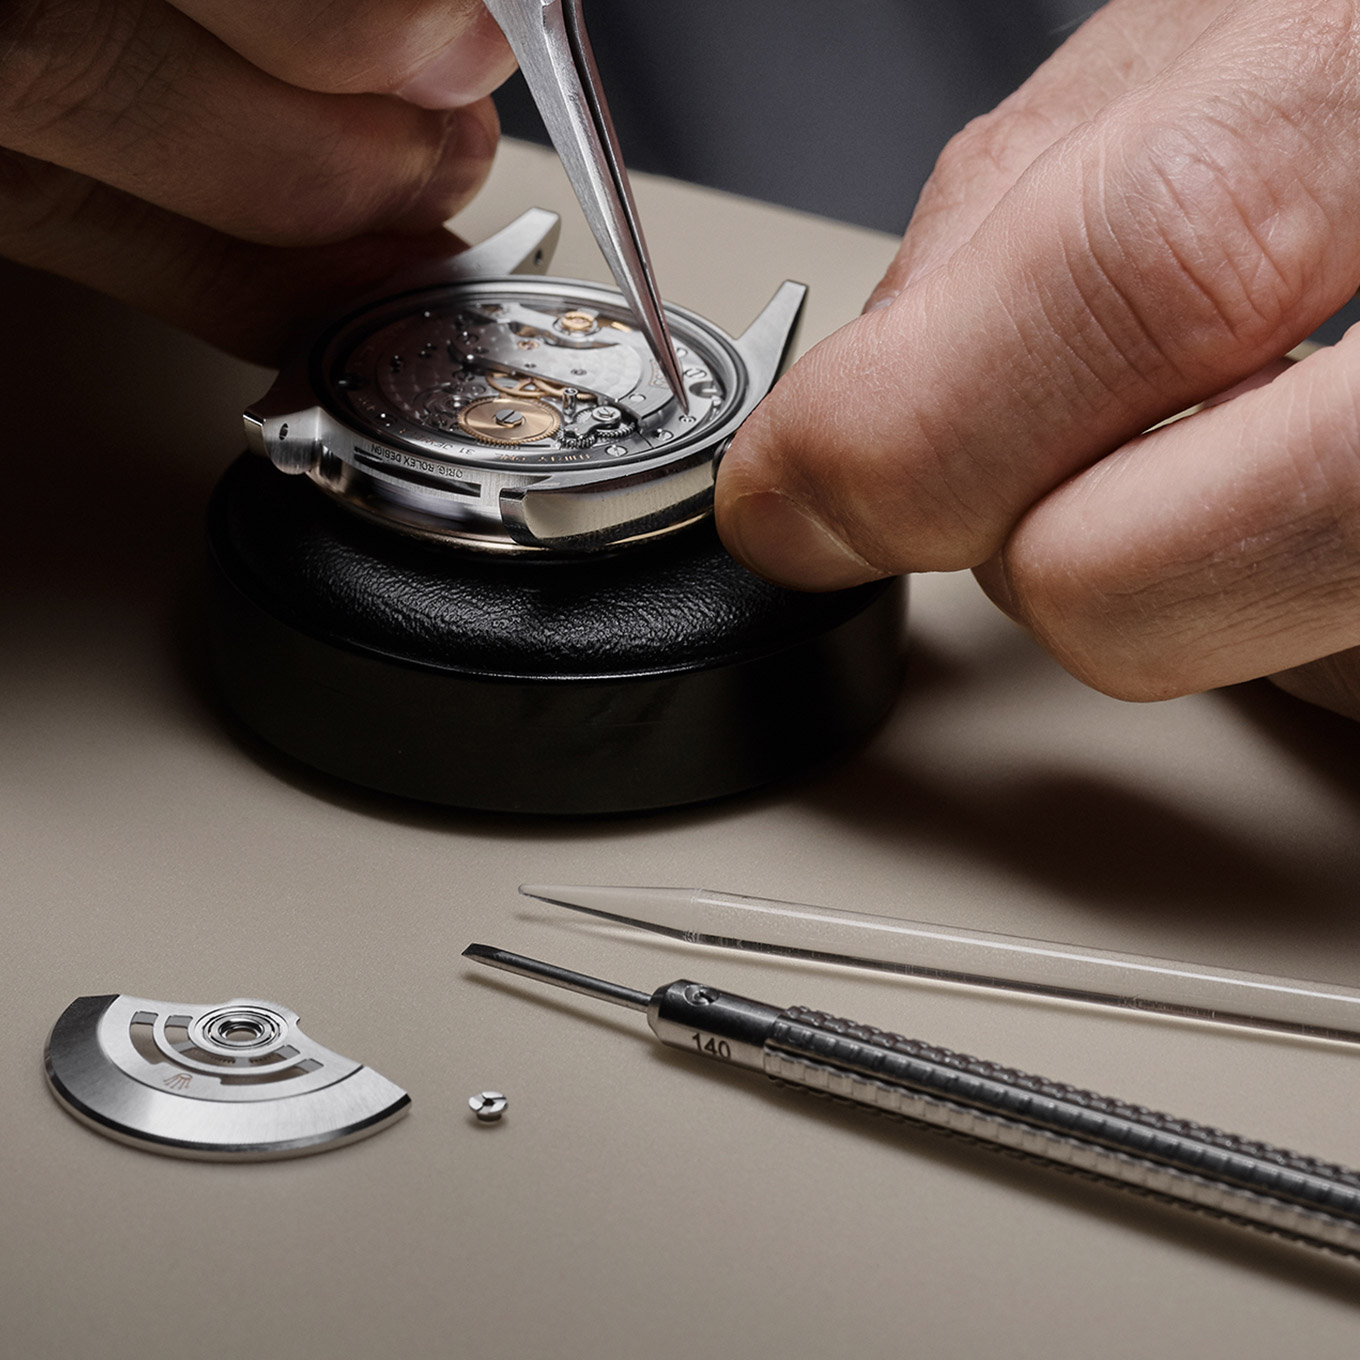 Rolex Servicing Procedure - OC Tanner Jewelers